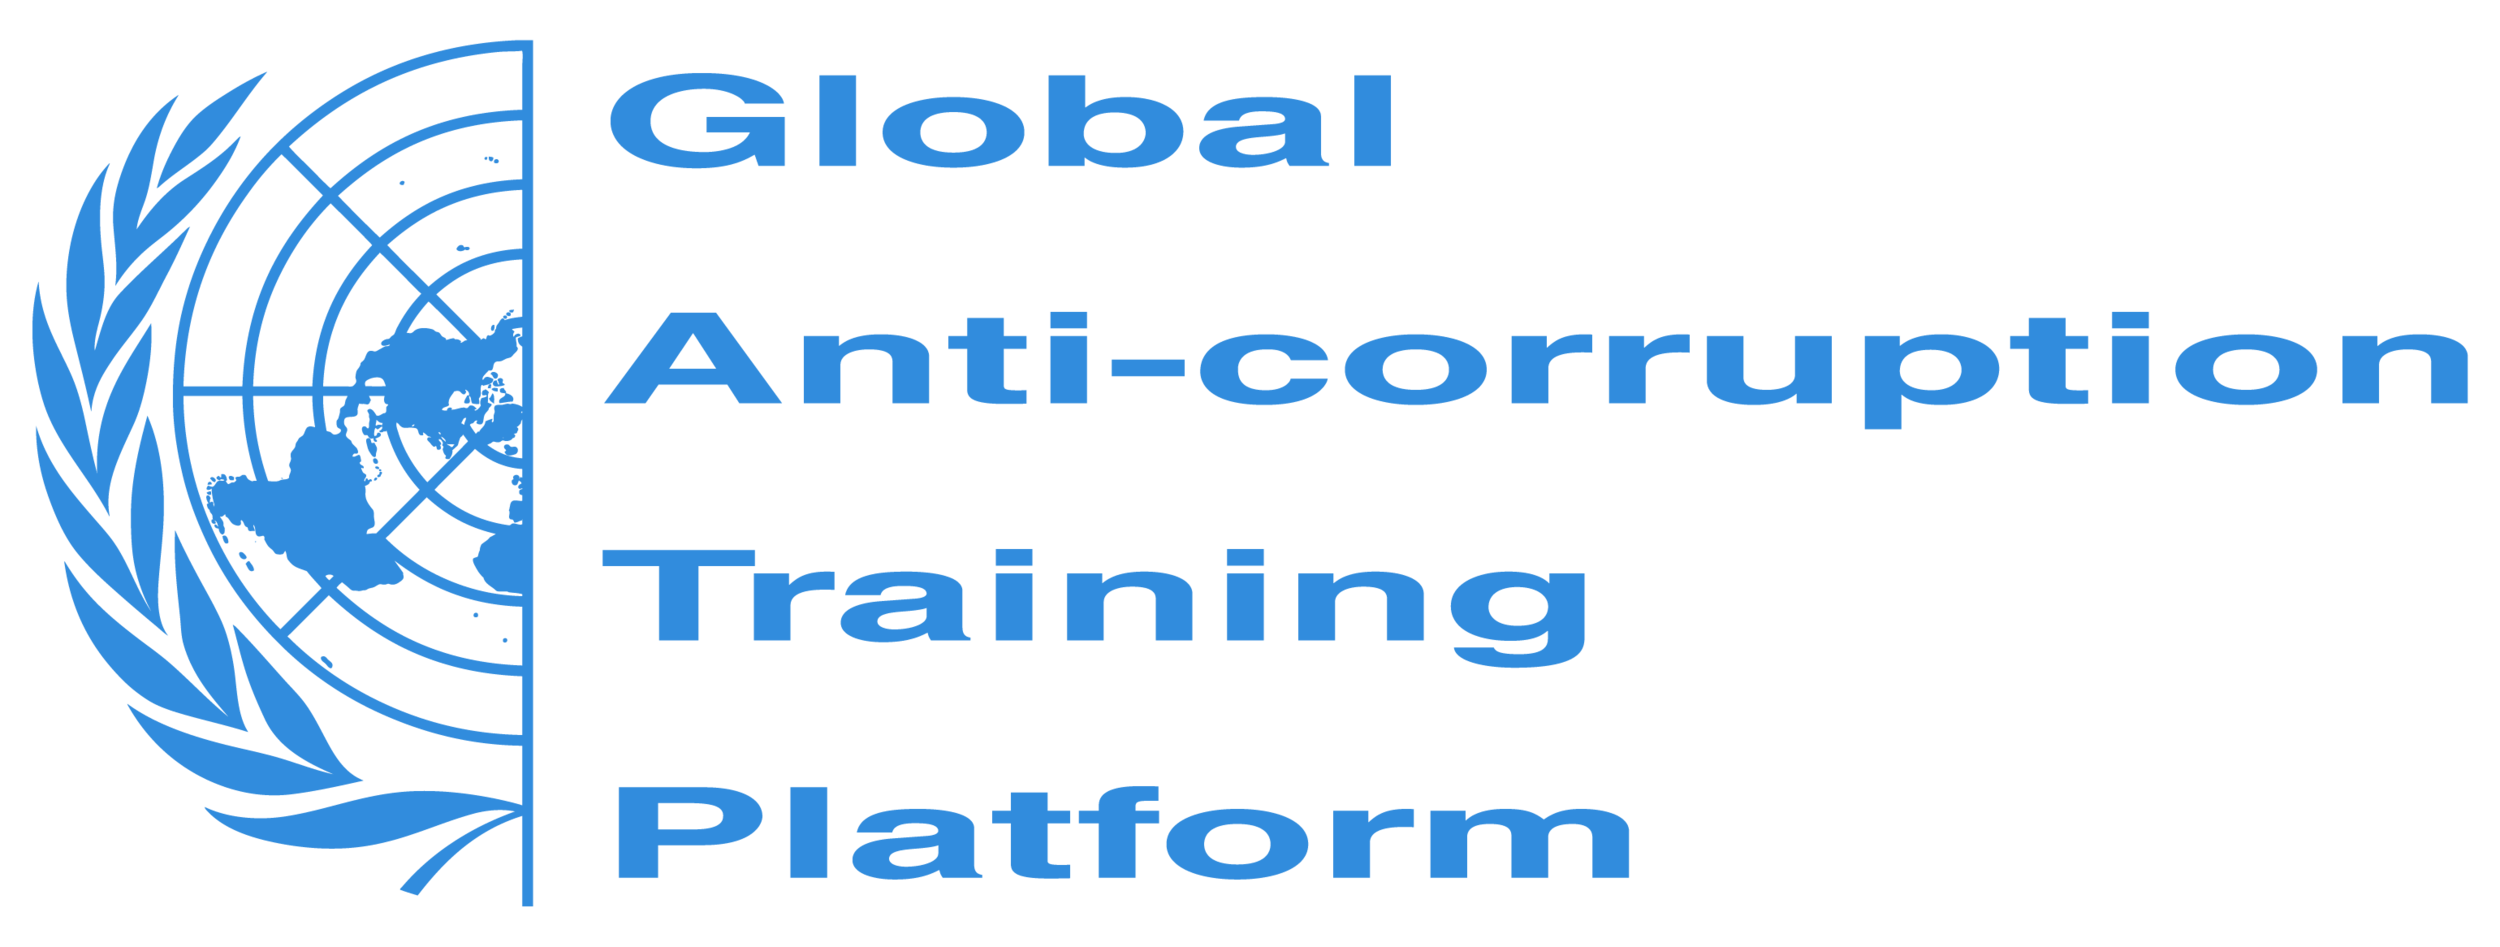 Global Anti-Corruption Training Platform